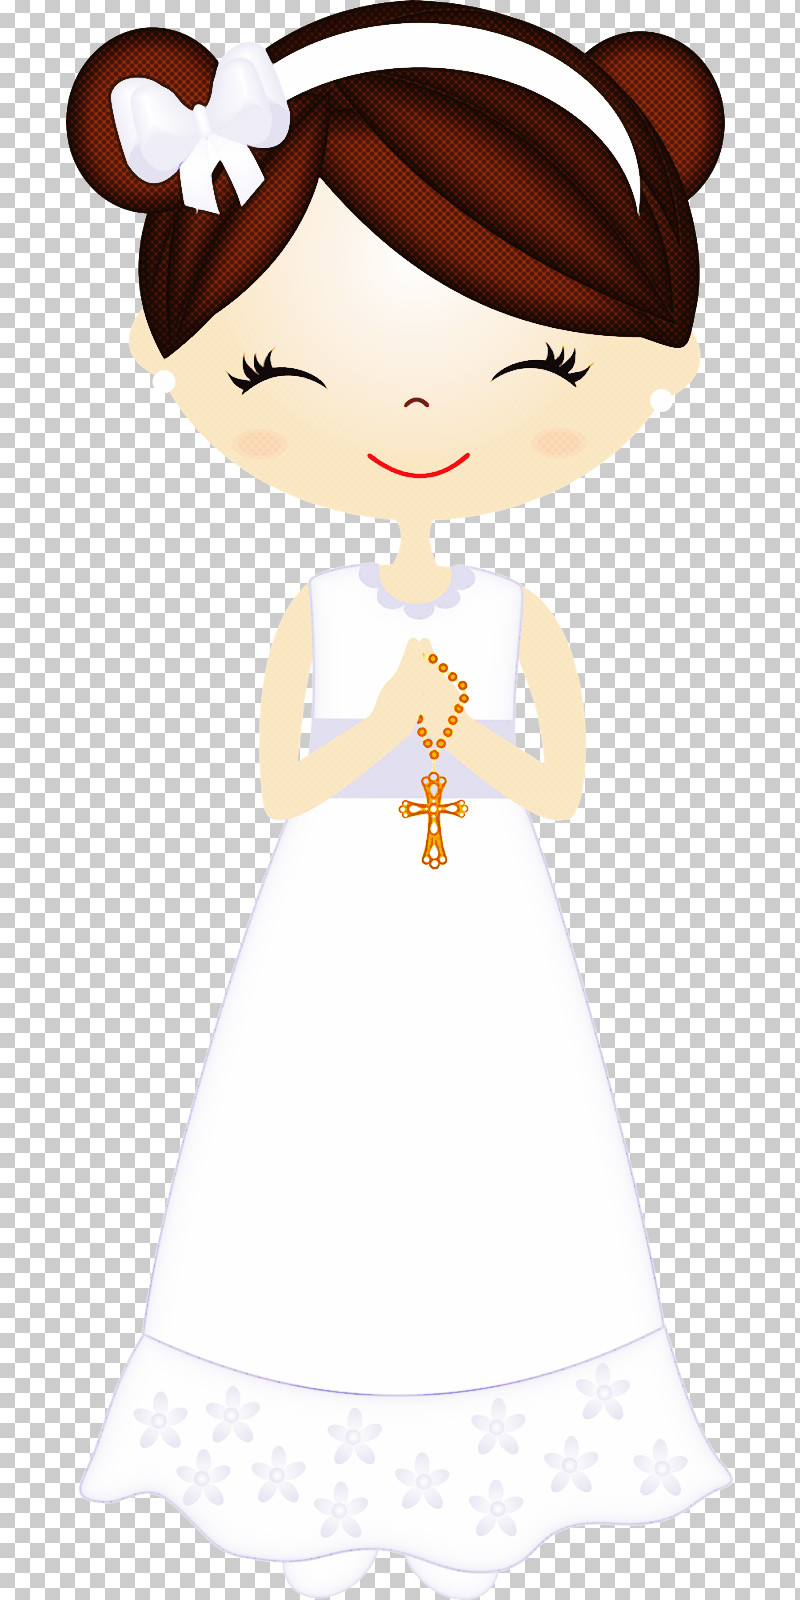 White Cartoon Dress Bride Smile PNG, Clipart, Bride, Cartoon, Dress, Smile, White Free PNG Download